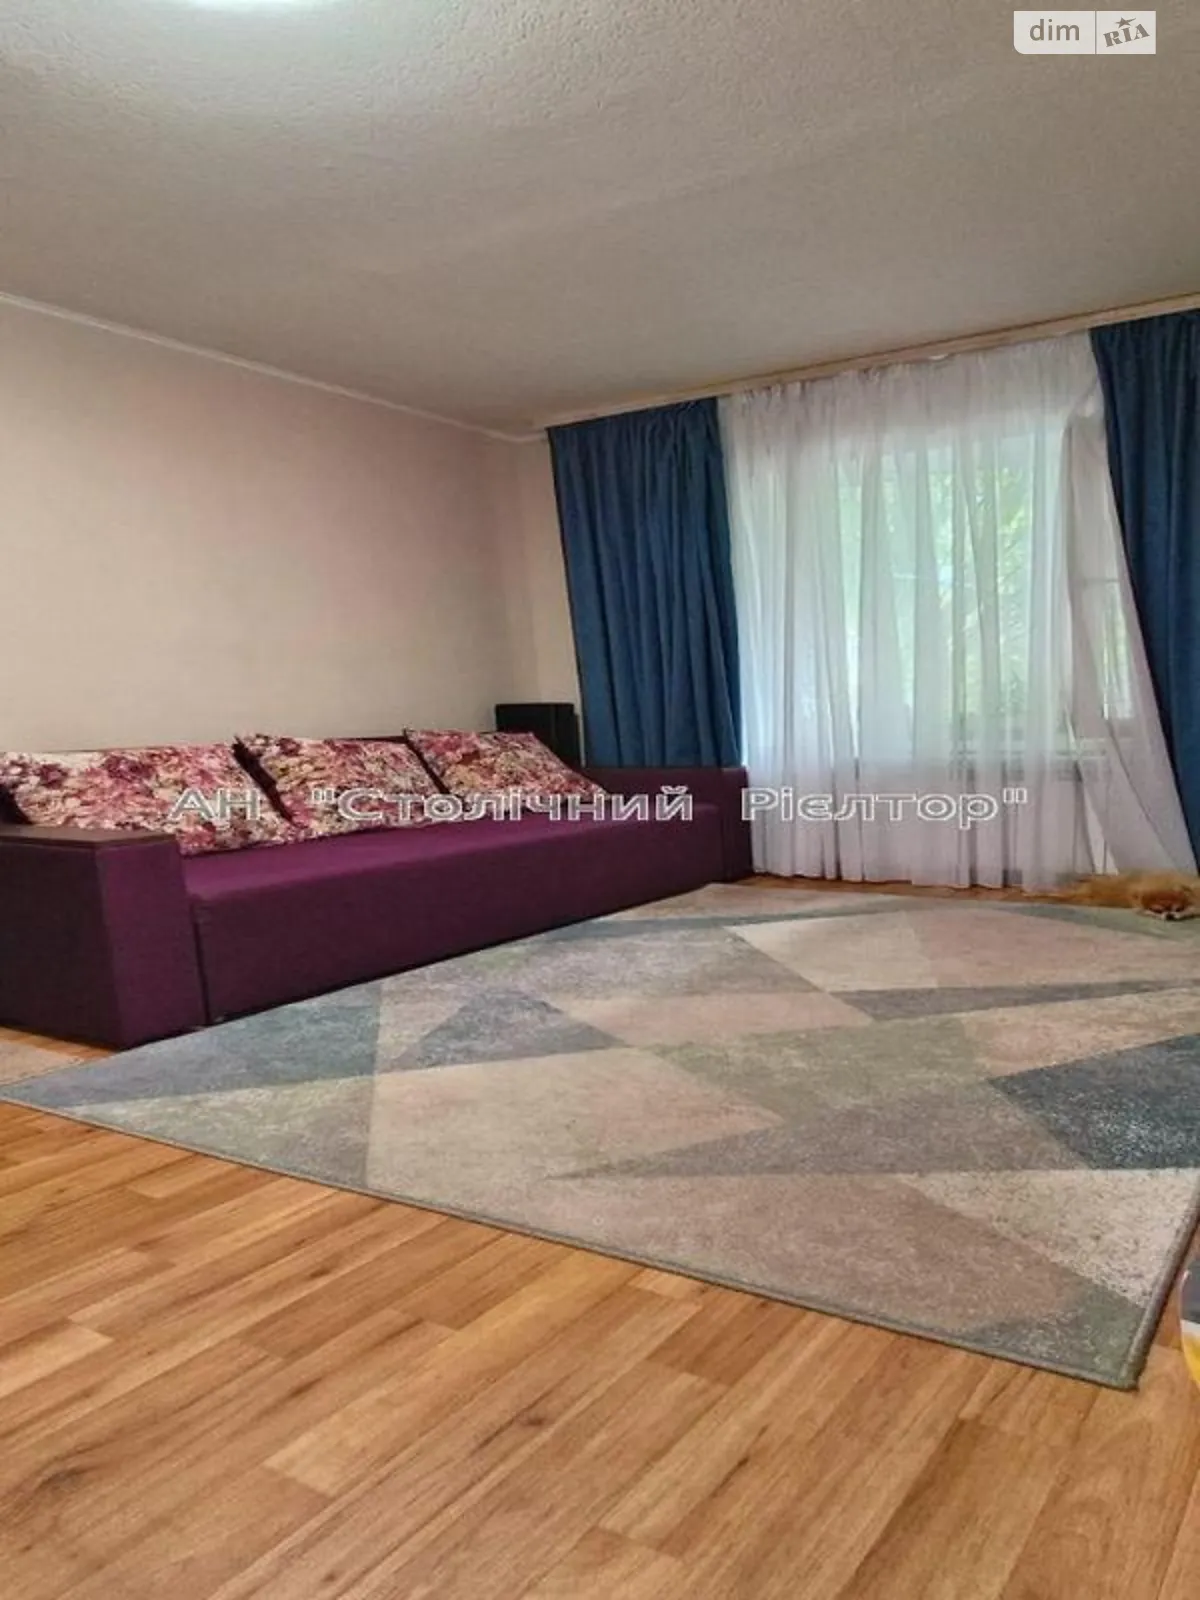 Продается комната 26.6 кв. м в Киеве, цена: 35950 $ - фото 1